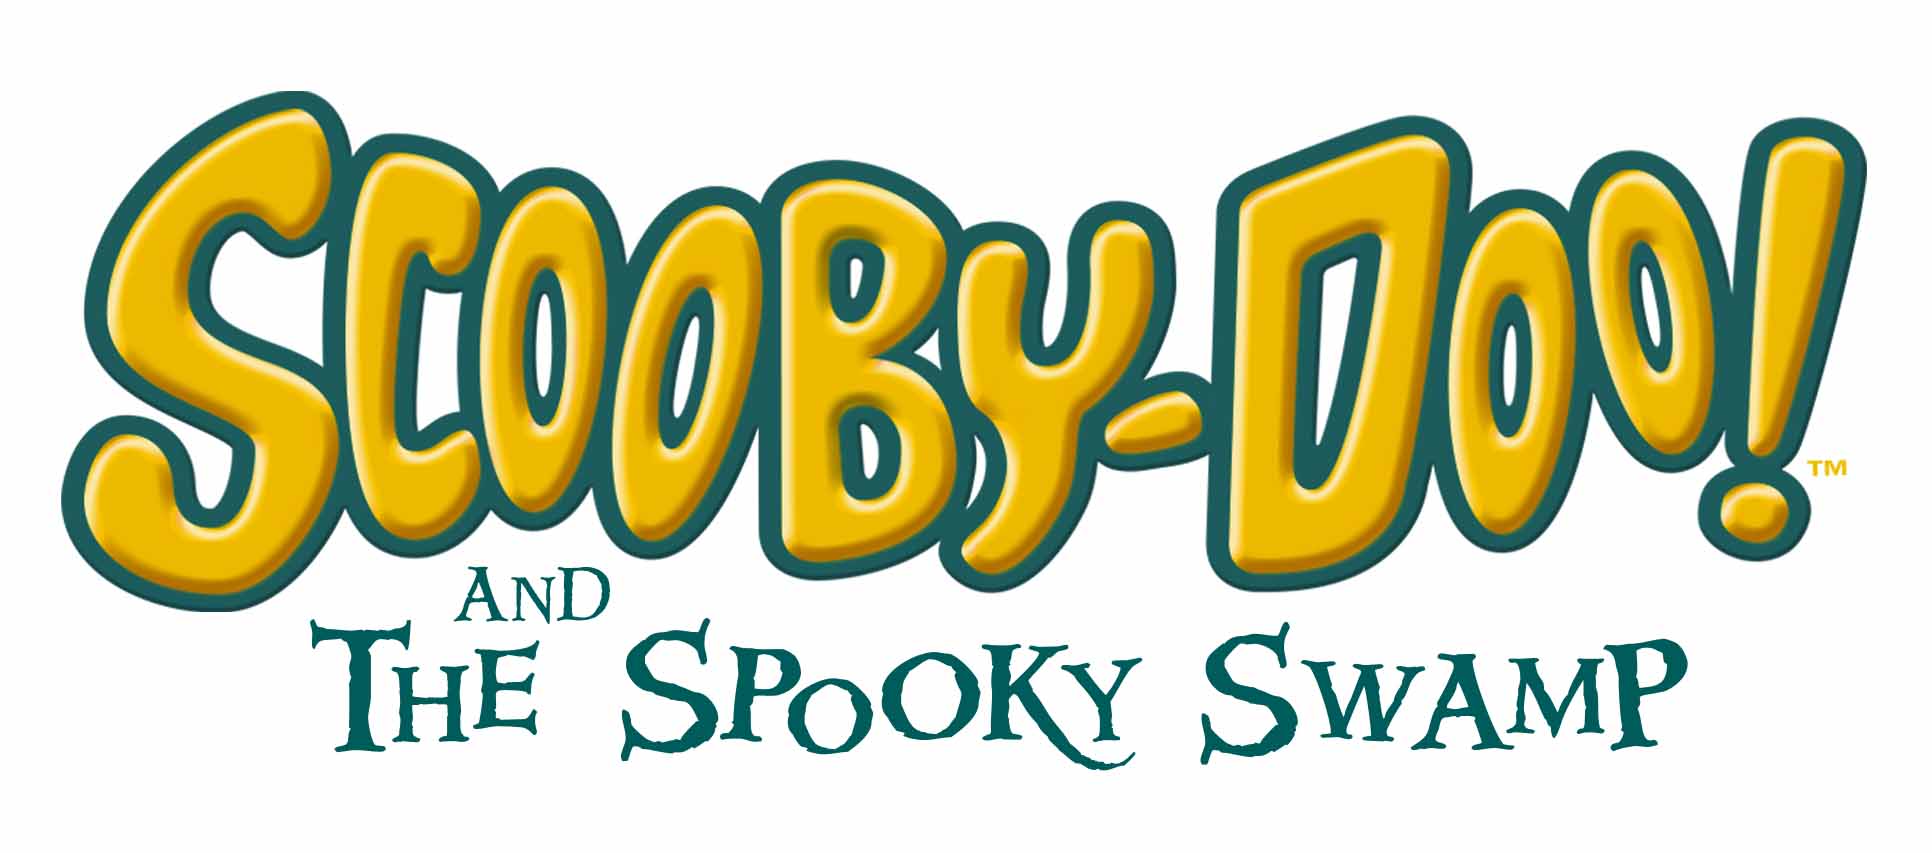 scooby doo spooky swamp movie